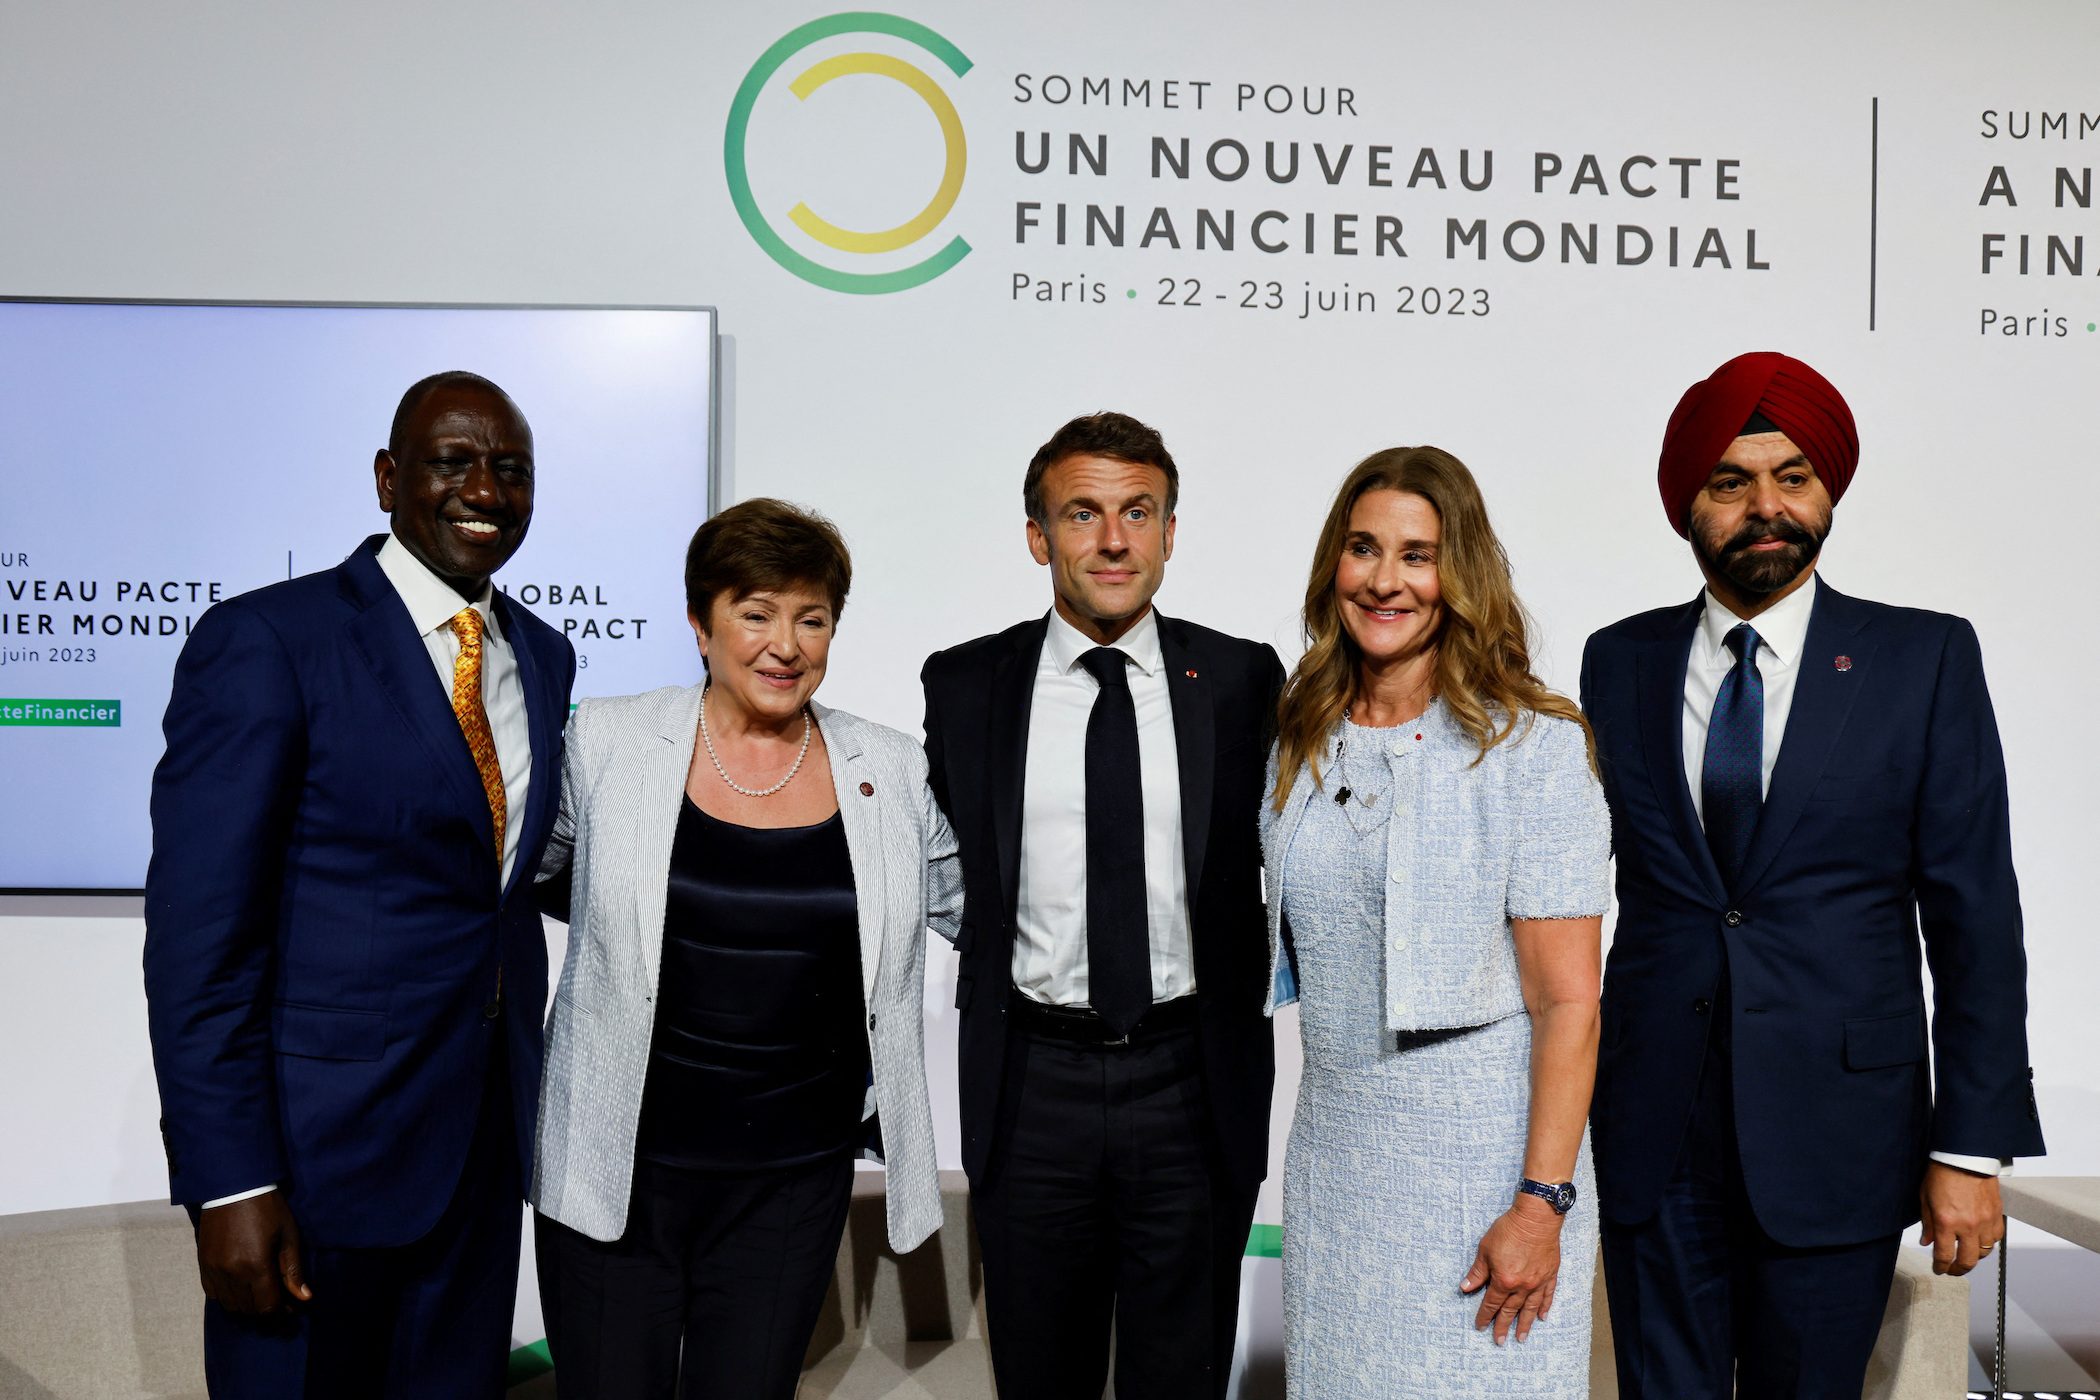 At Paris summit, World Bank, IMF take steps to boost crisis financing